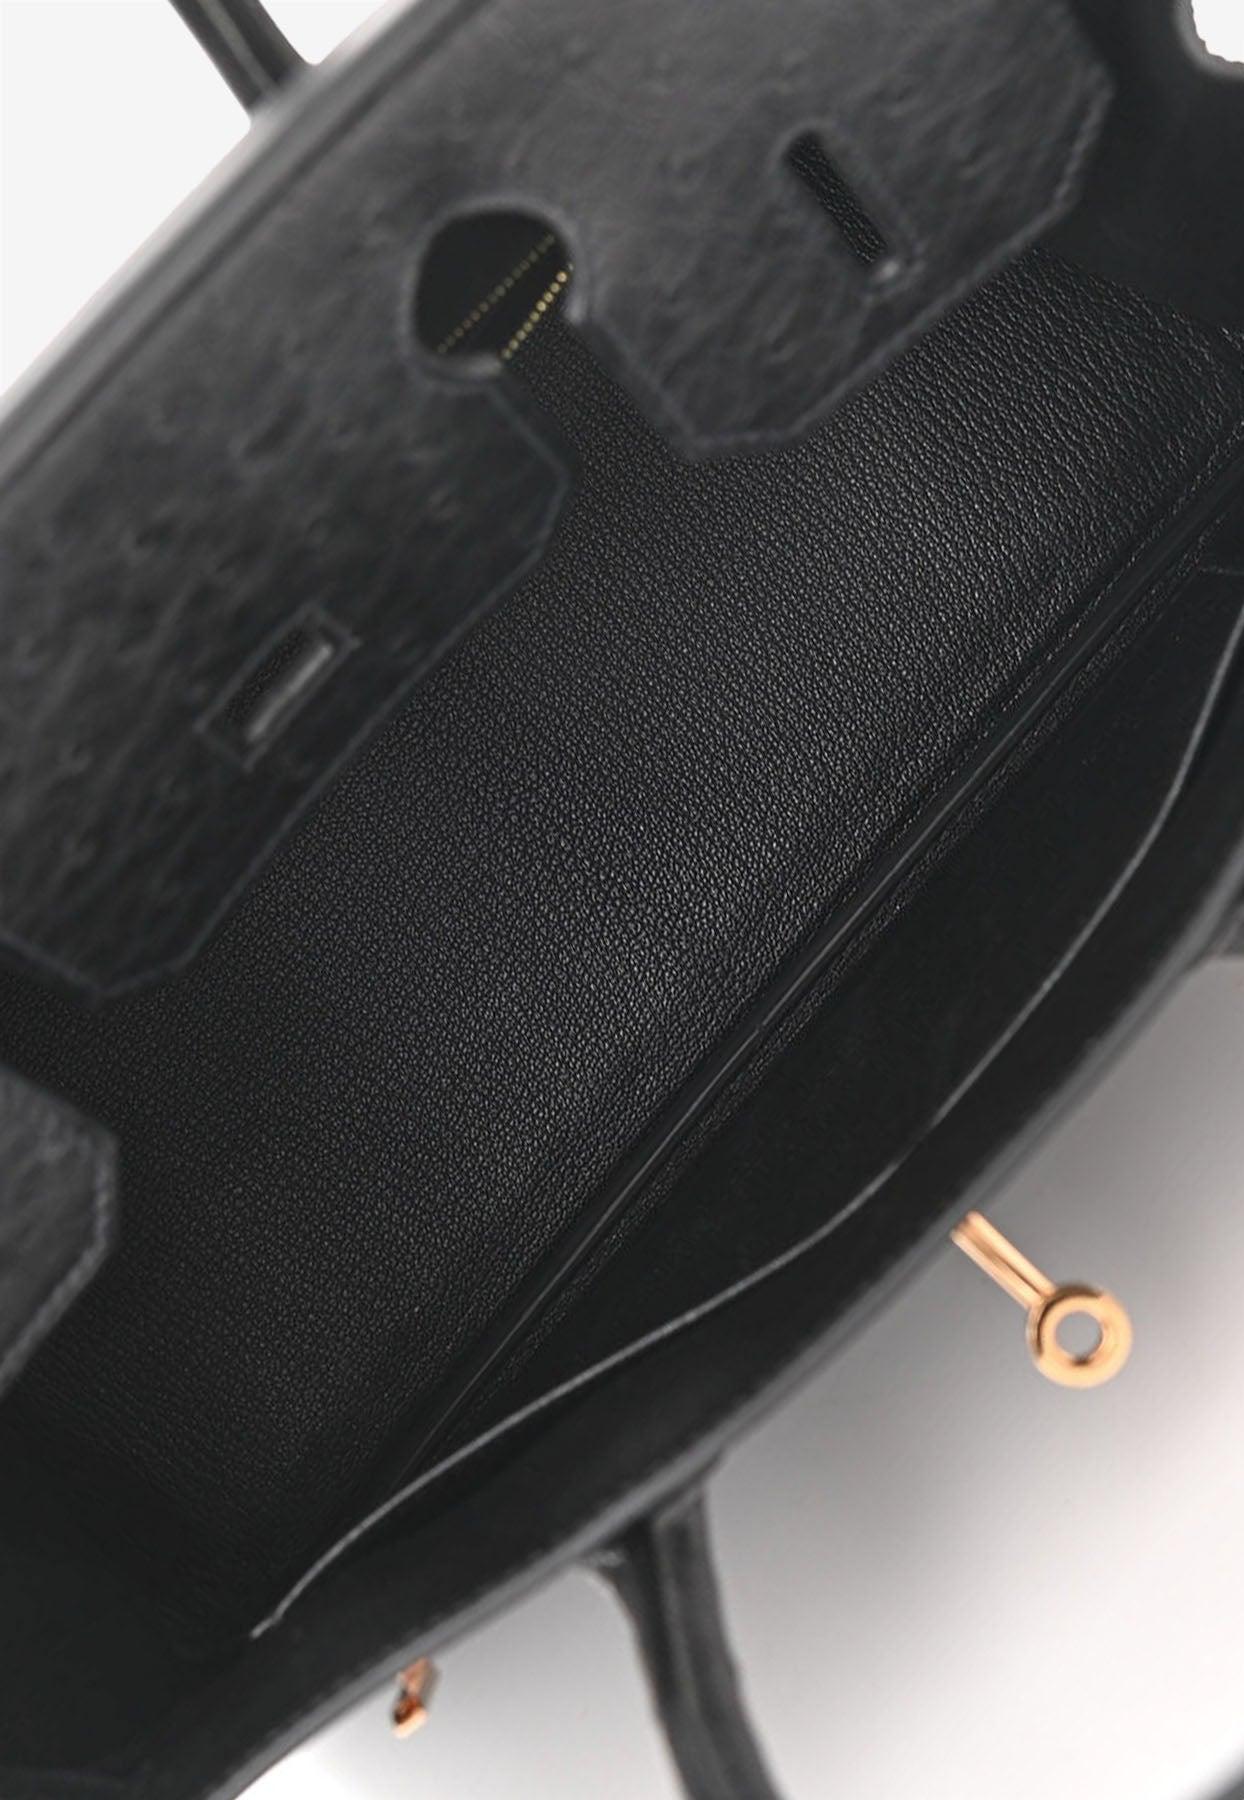 Hermès Birkin 25 Black Ostrich Rose Gold Hardware - 2021, Z